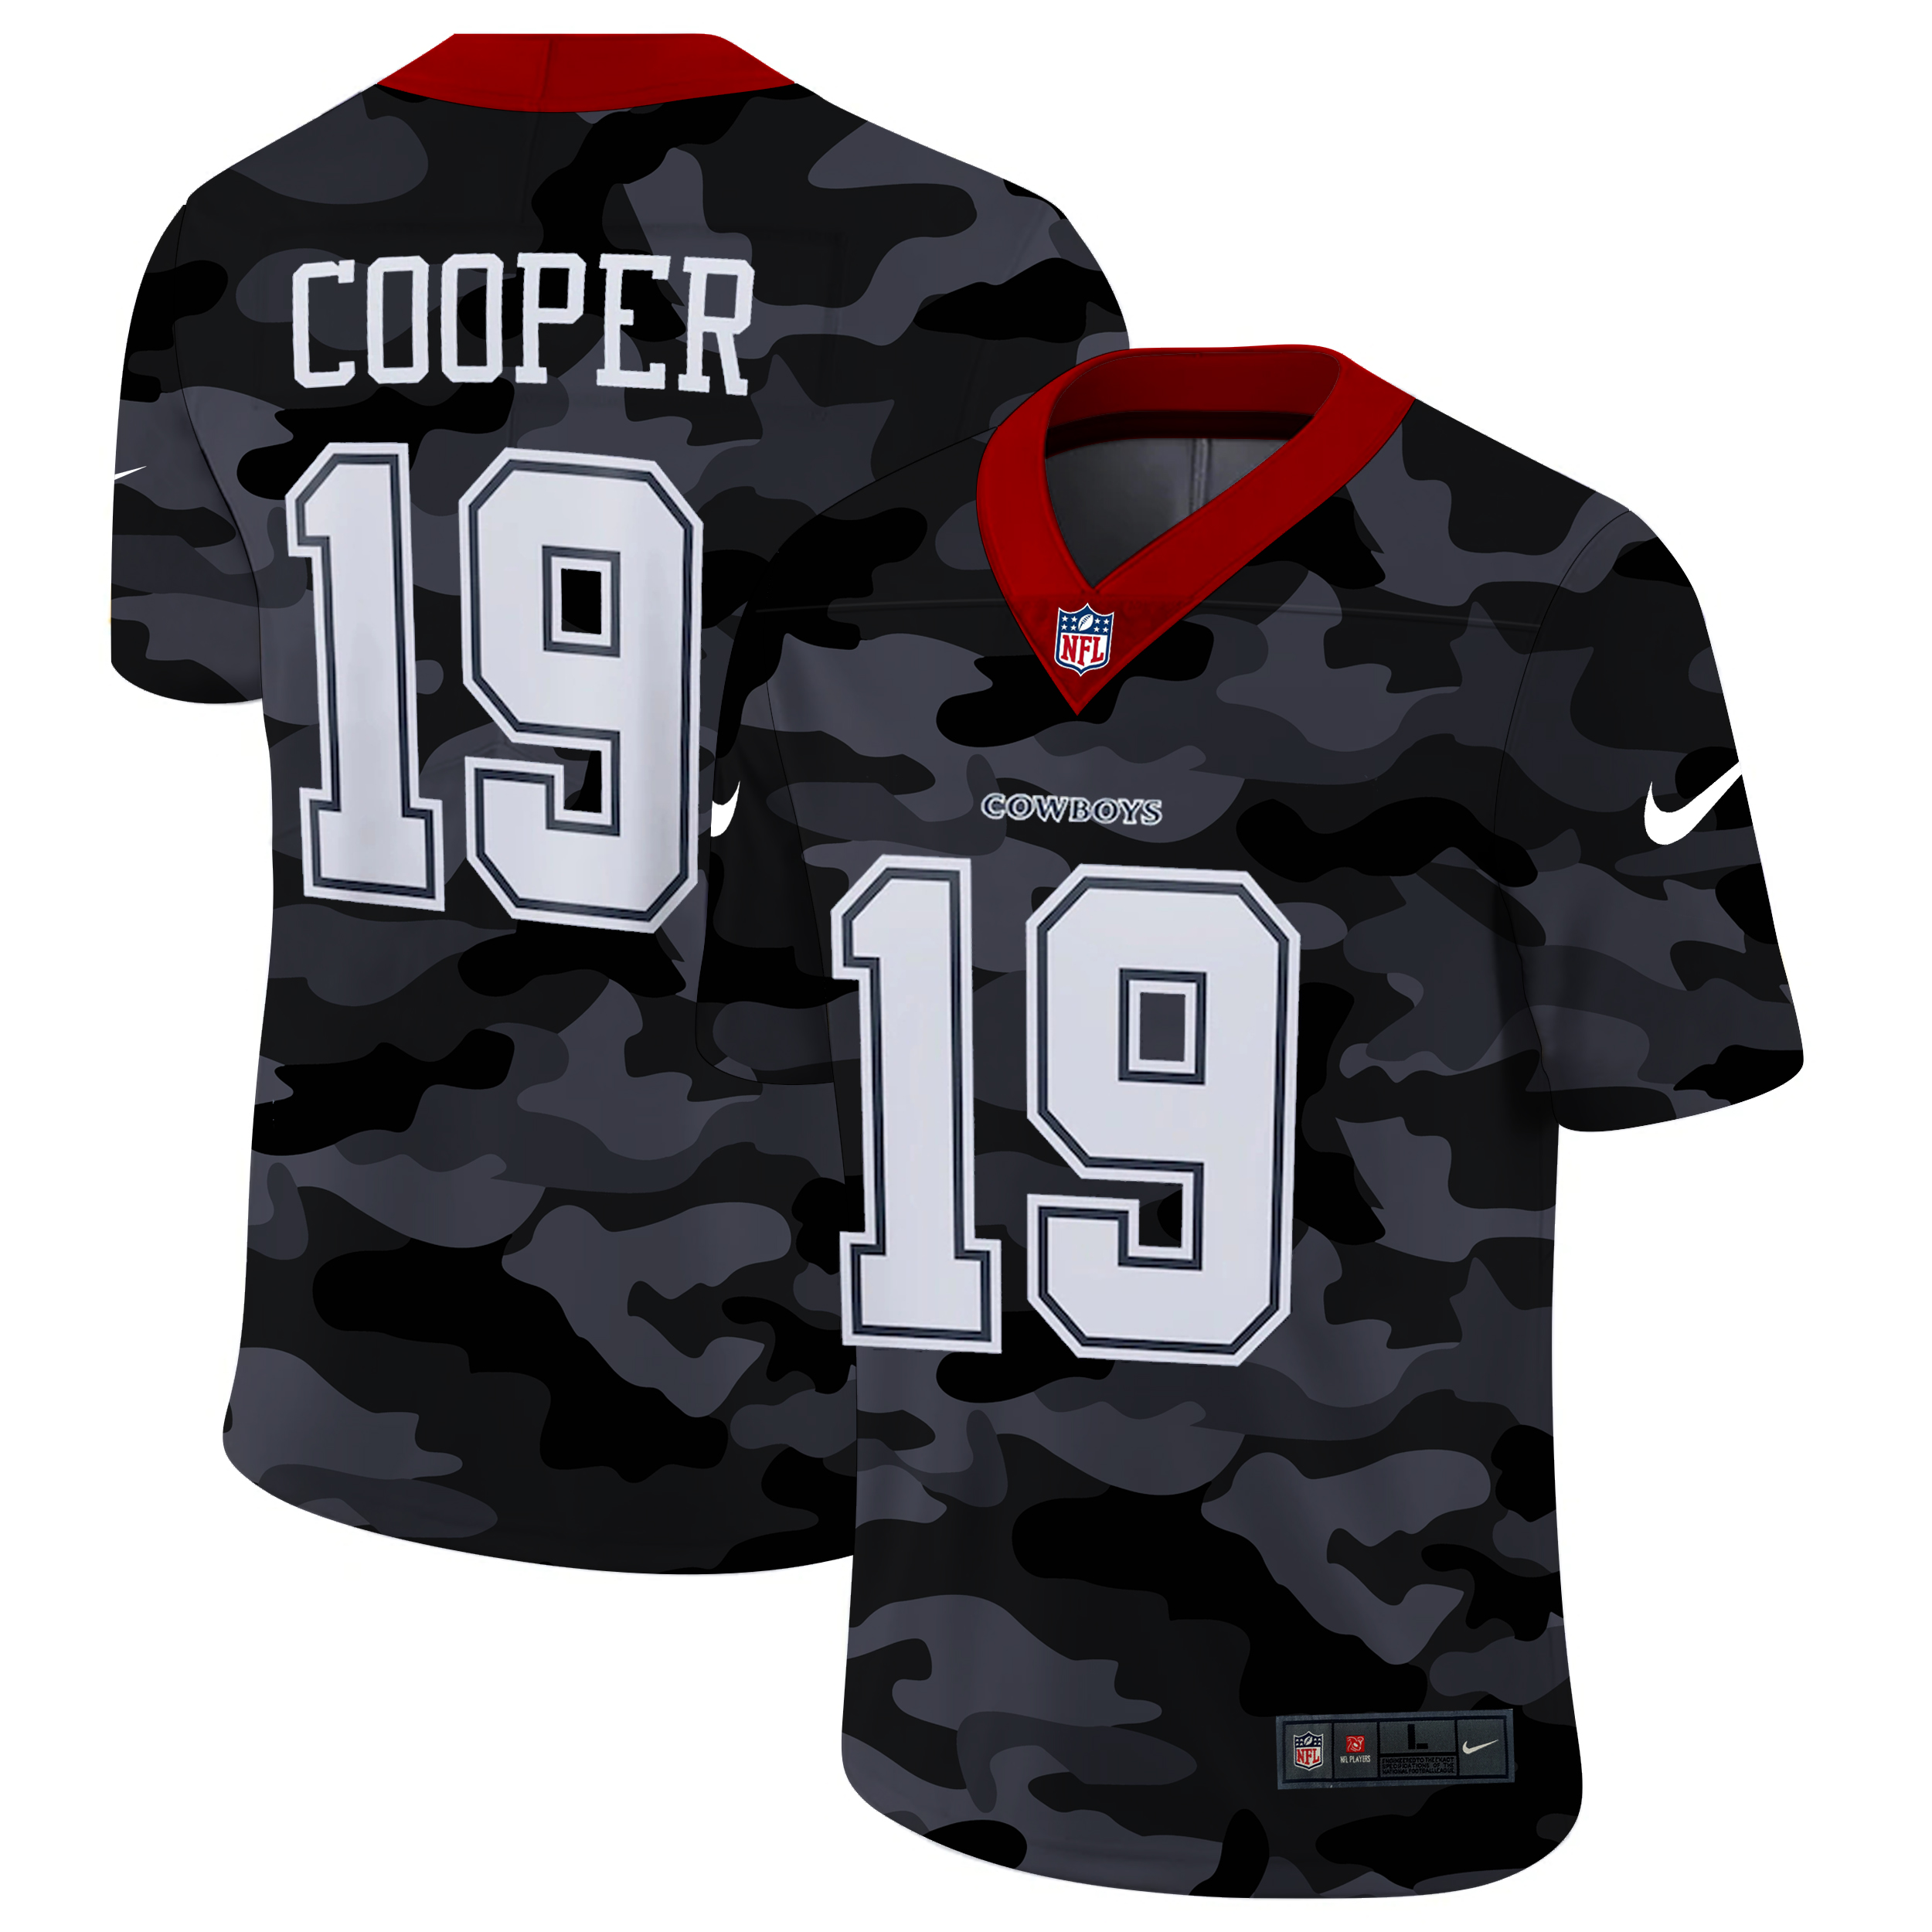 Amari Cooper Camo Stitched Jersey, Men's Dallas Cowboys 19 NFL Limited Jersey